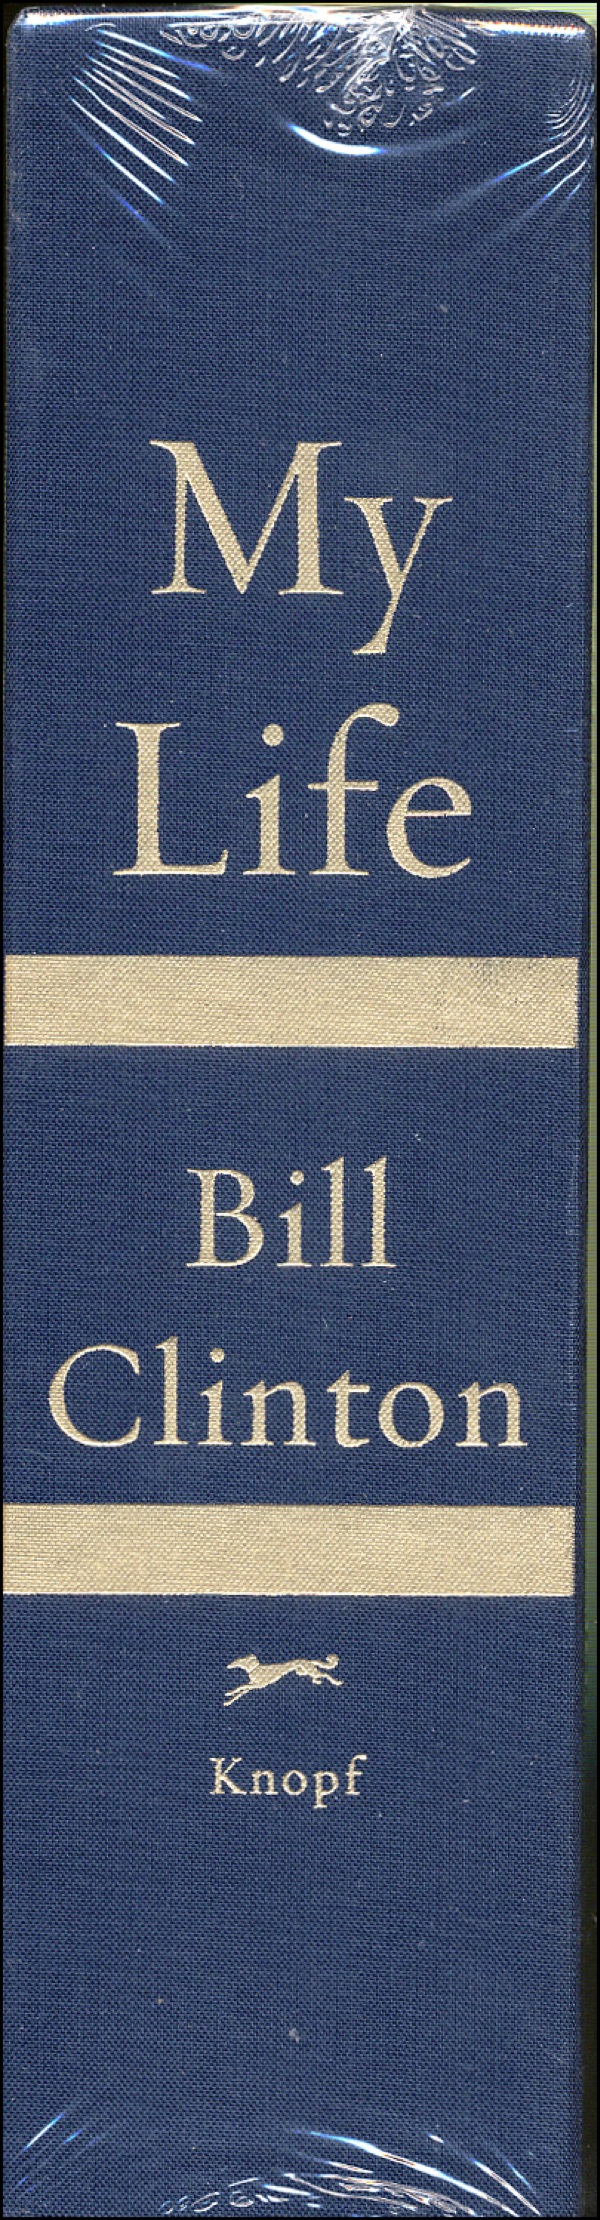 Lot #18 Bill Clinton